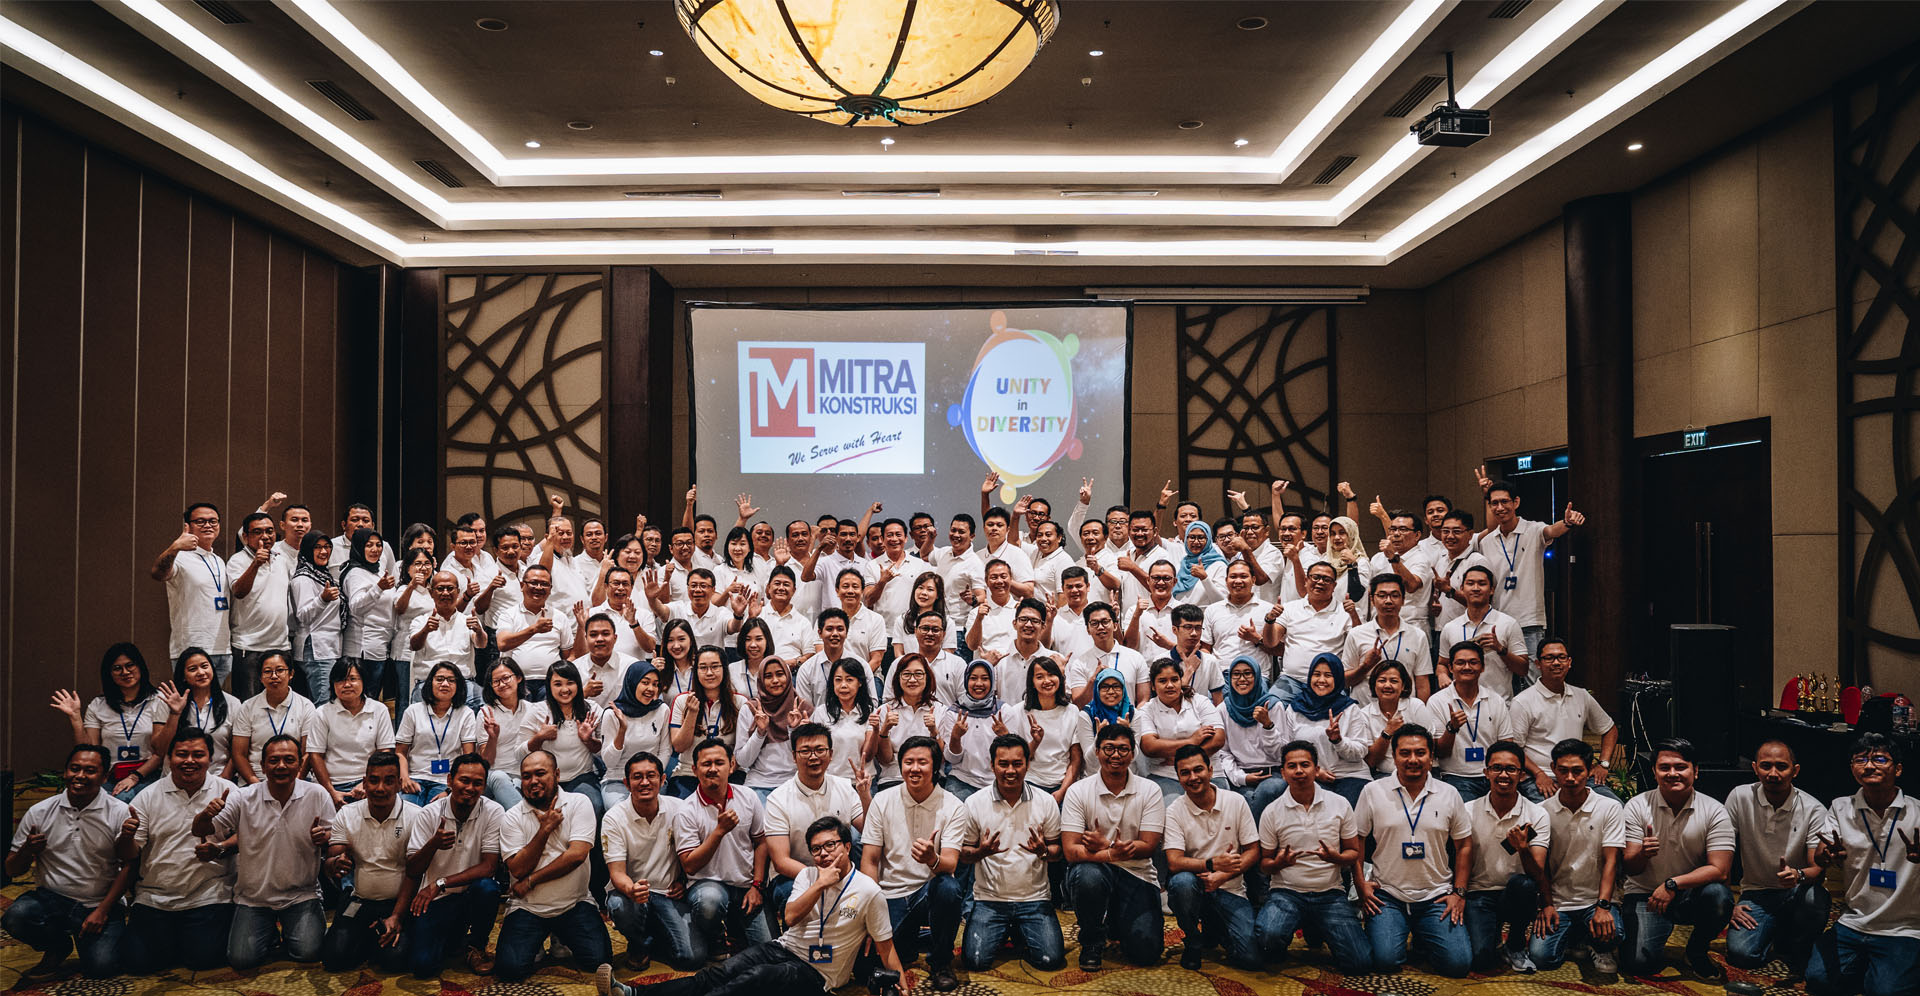 Raker ketiga Mitra Konstruksi dengan tema “Unity in Diversity” diadakan pada 19-20 Desember 2019 di Discovery Hotel Ancol